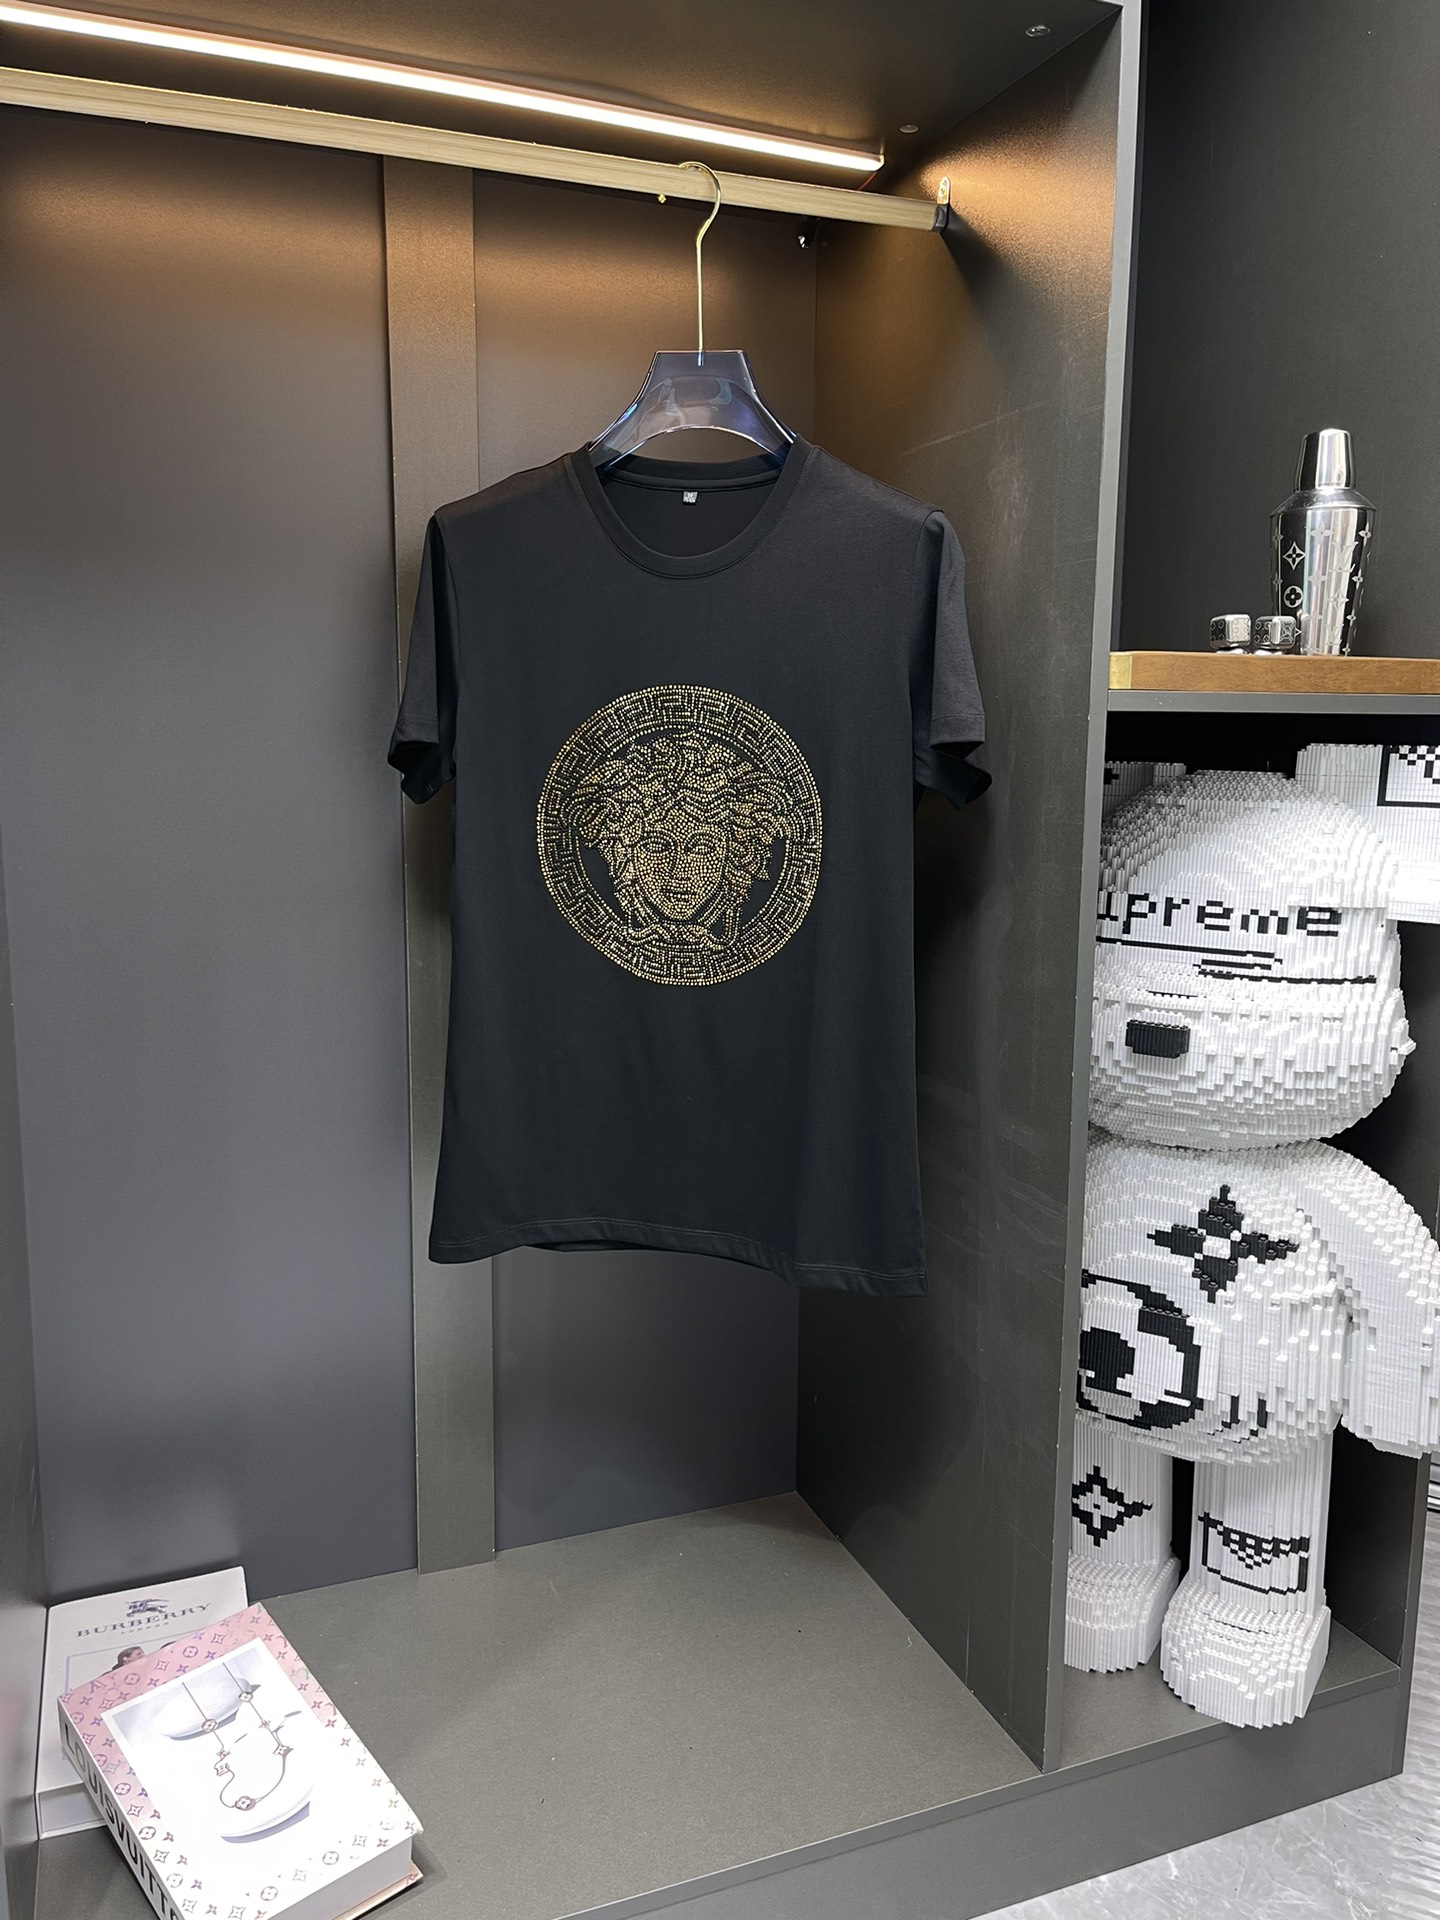 Buy 1:1
 Versace Clothing T-Shirt Unisex Cotton Mercerized Spring/Summer Collection Fashion Short Sleeve